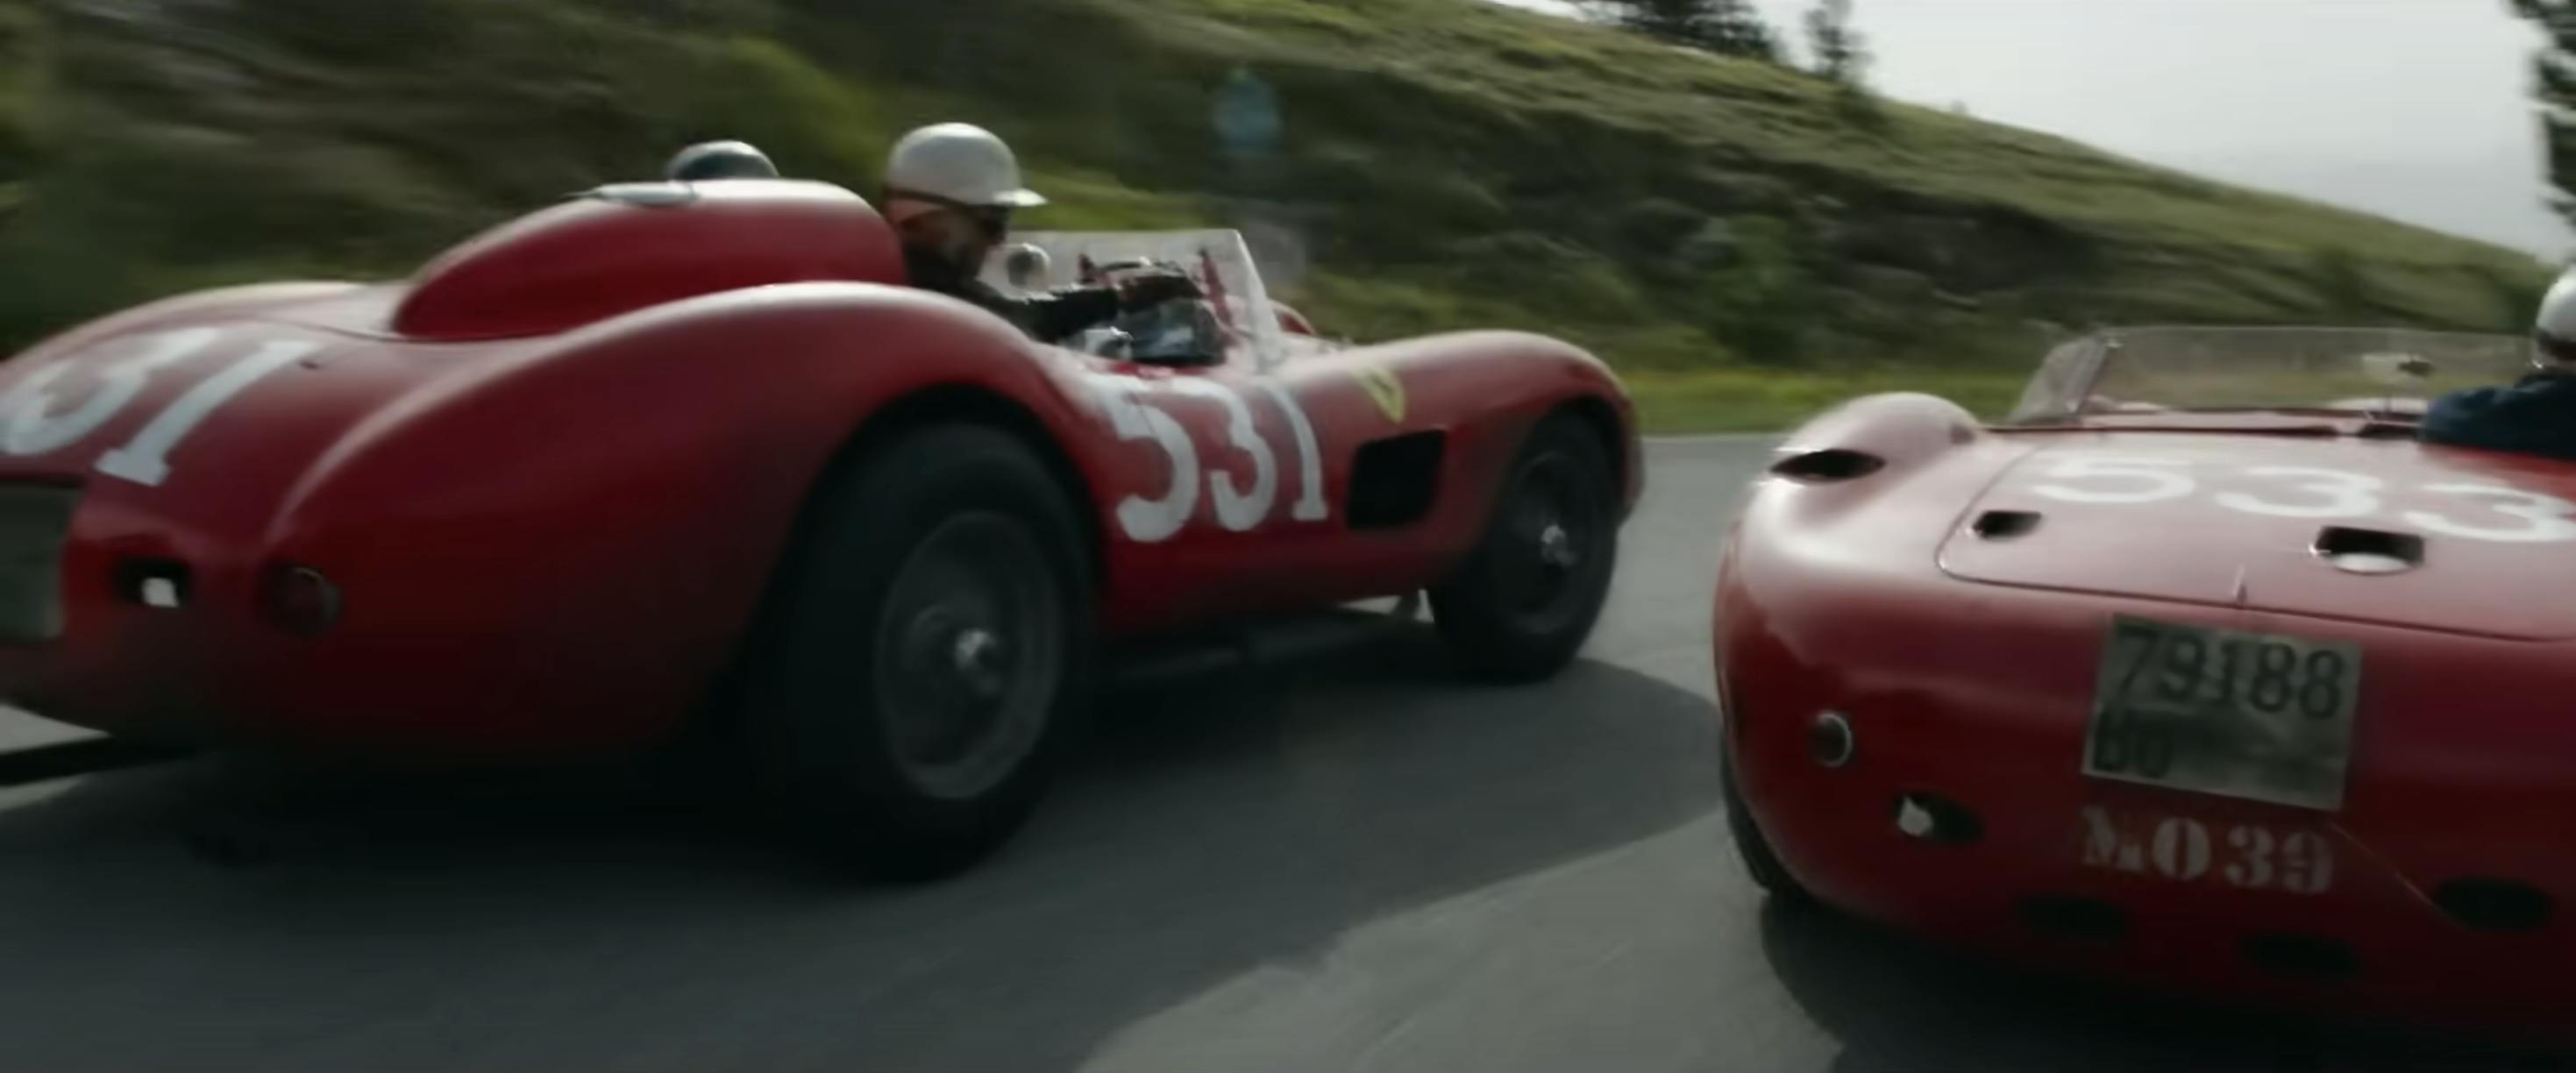 Ferrari film racing action still overtake